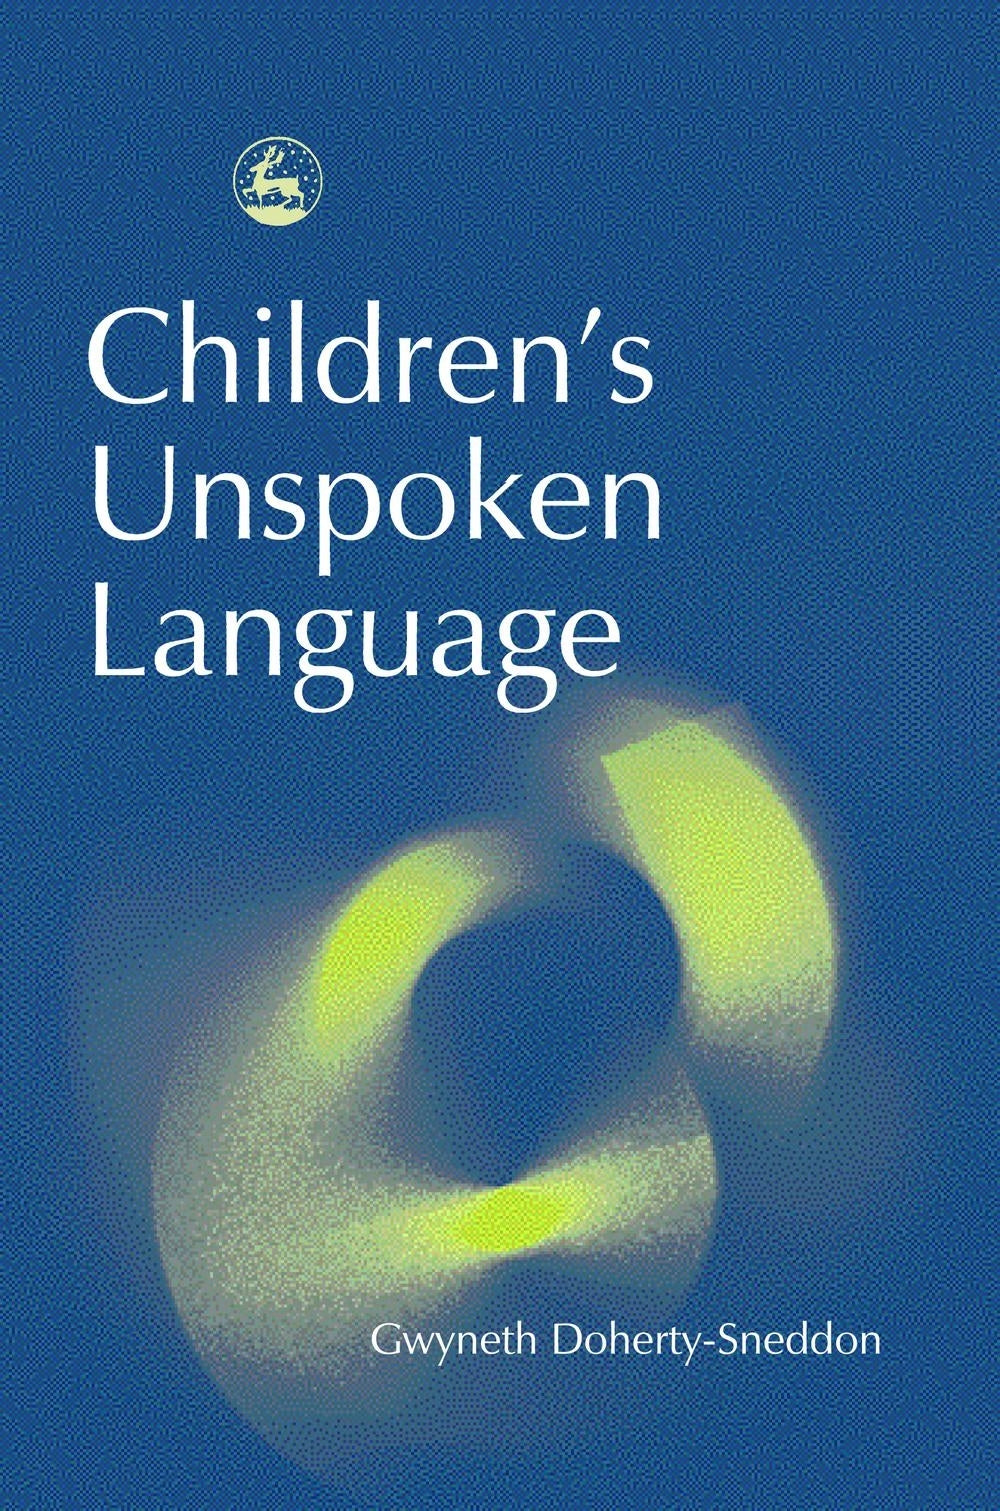 Children's Unspoken Language by Gwyneth Doherty-Sneddon